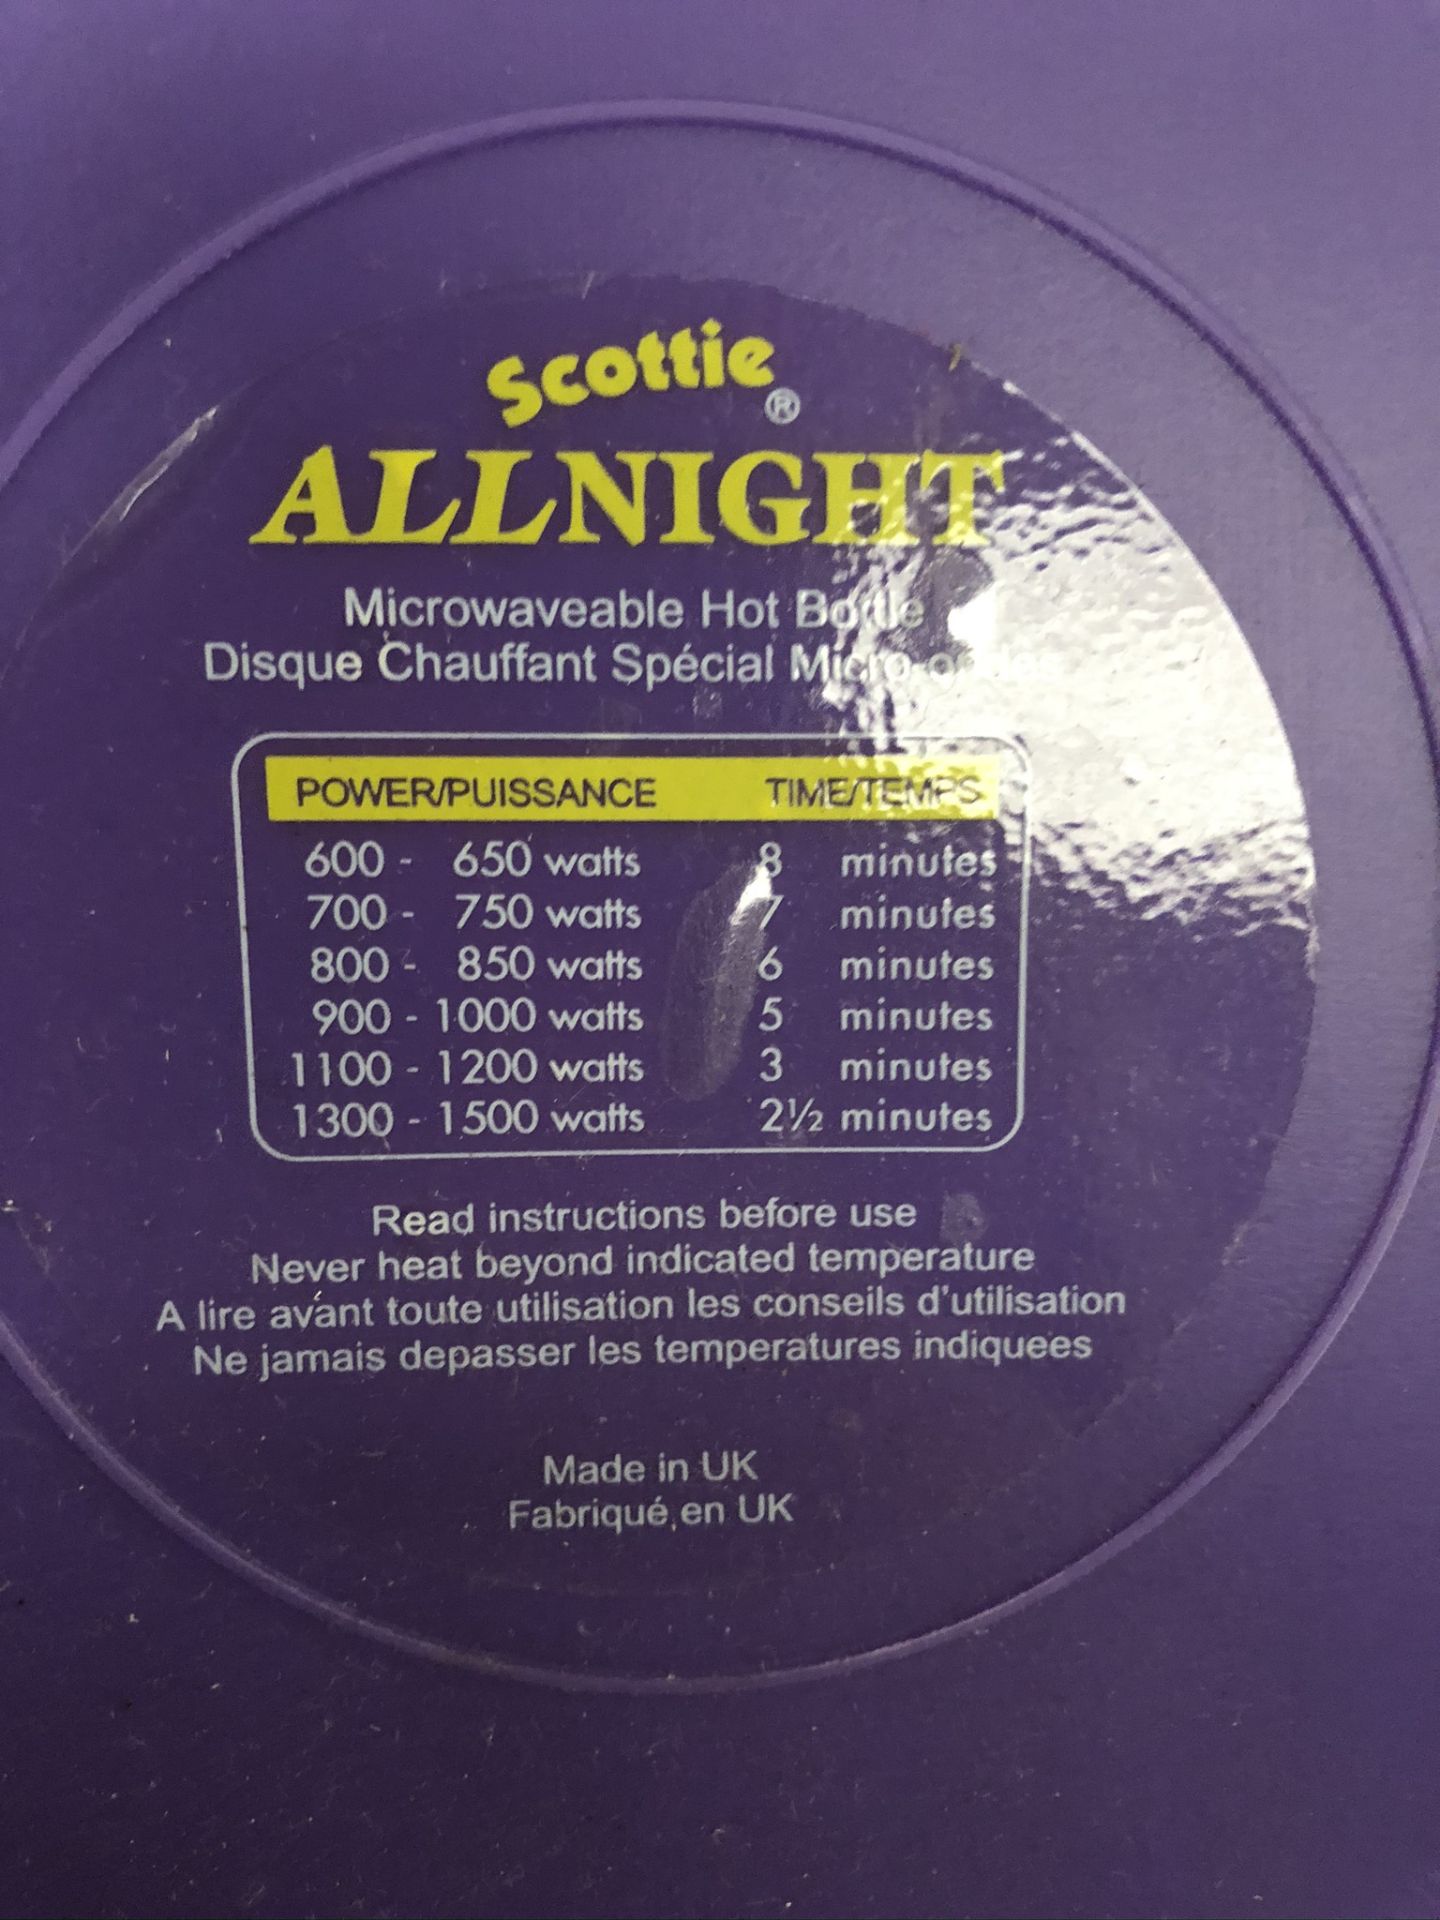 12 x Scottie AllNight Microwaveable Hot Bottles - Image 3 of 3